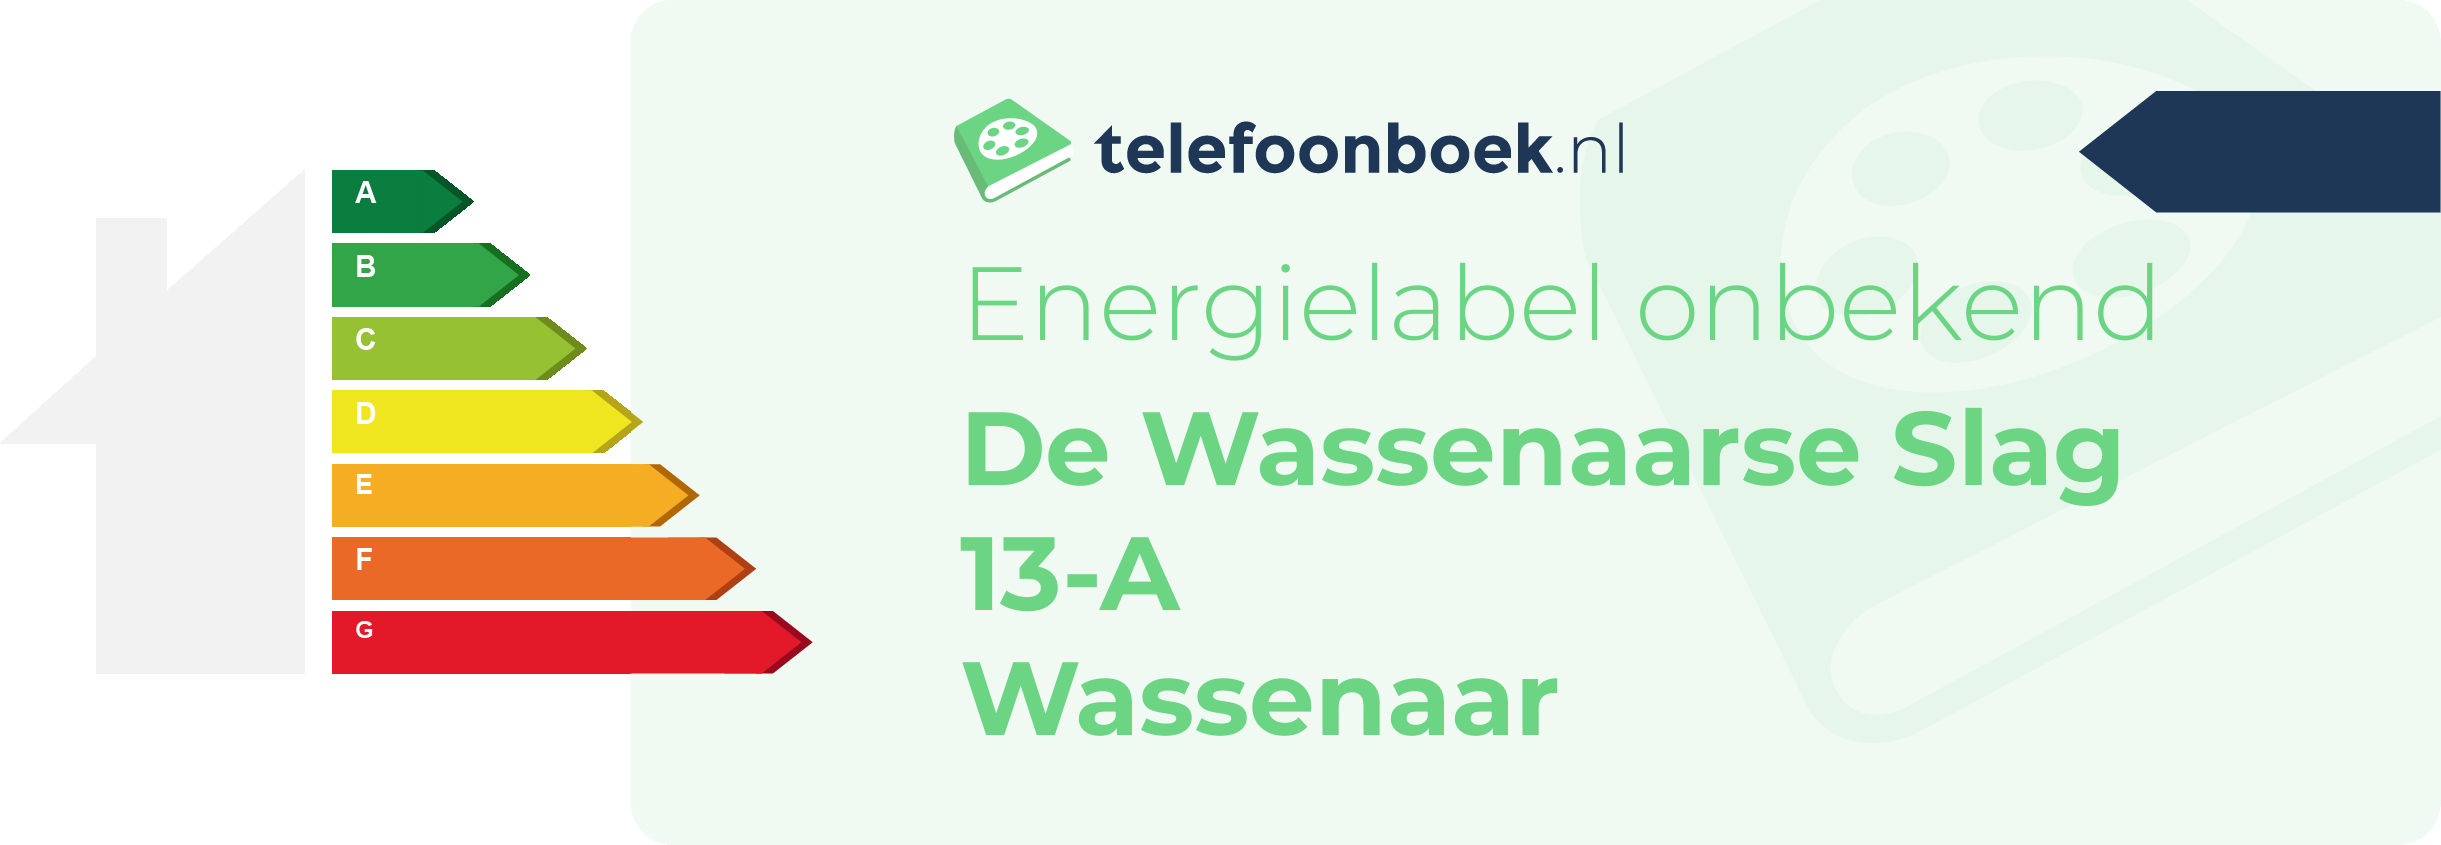 Energielabel De Wassenaarse Slag 13-A Wassenaar